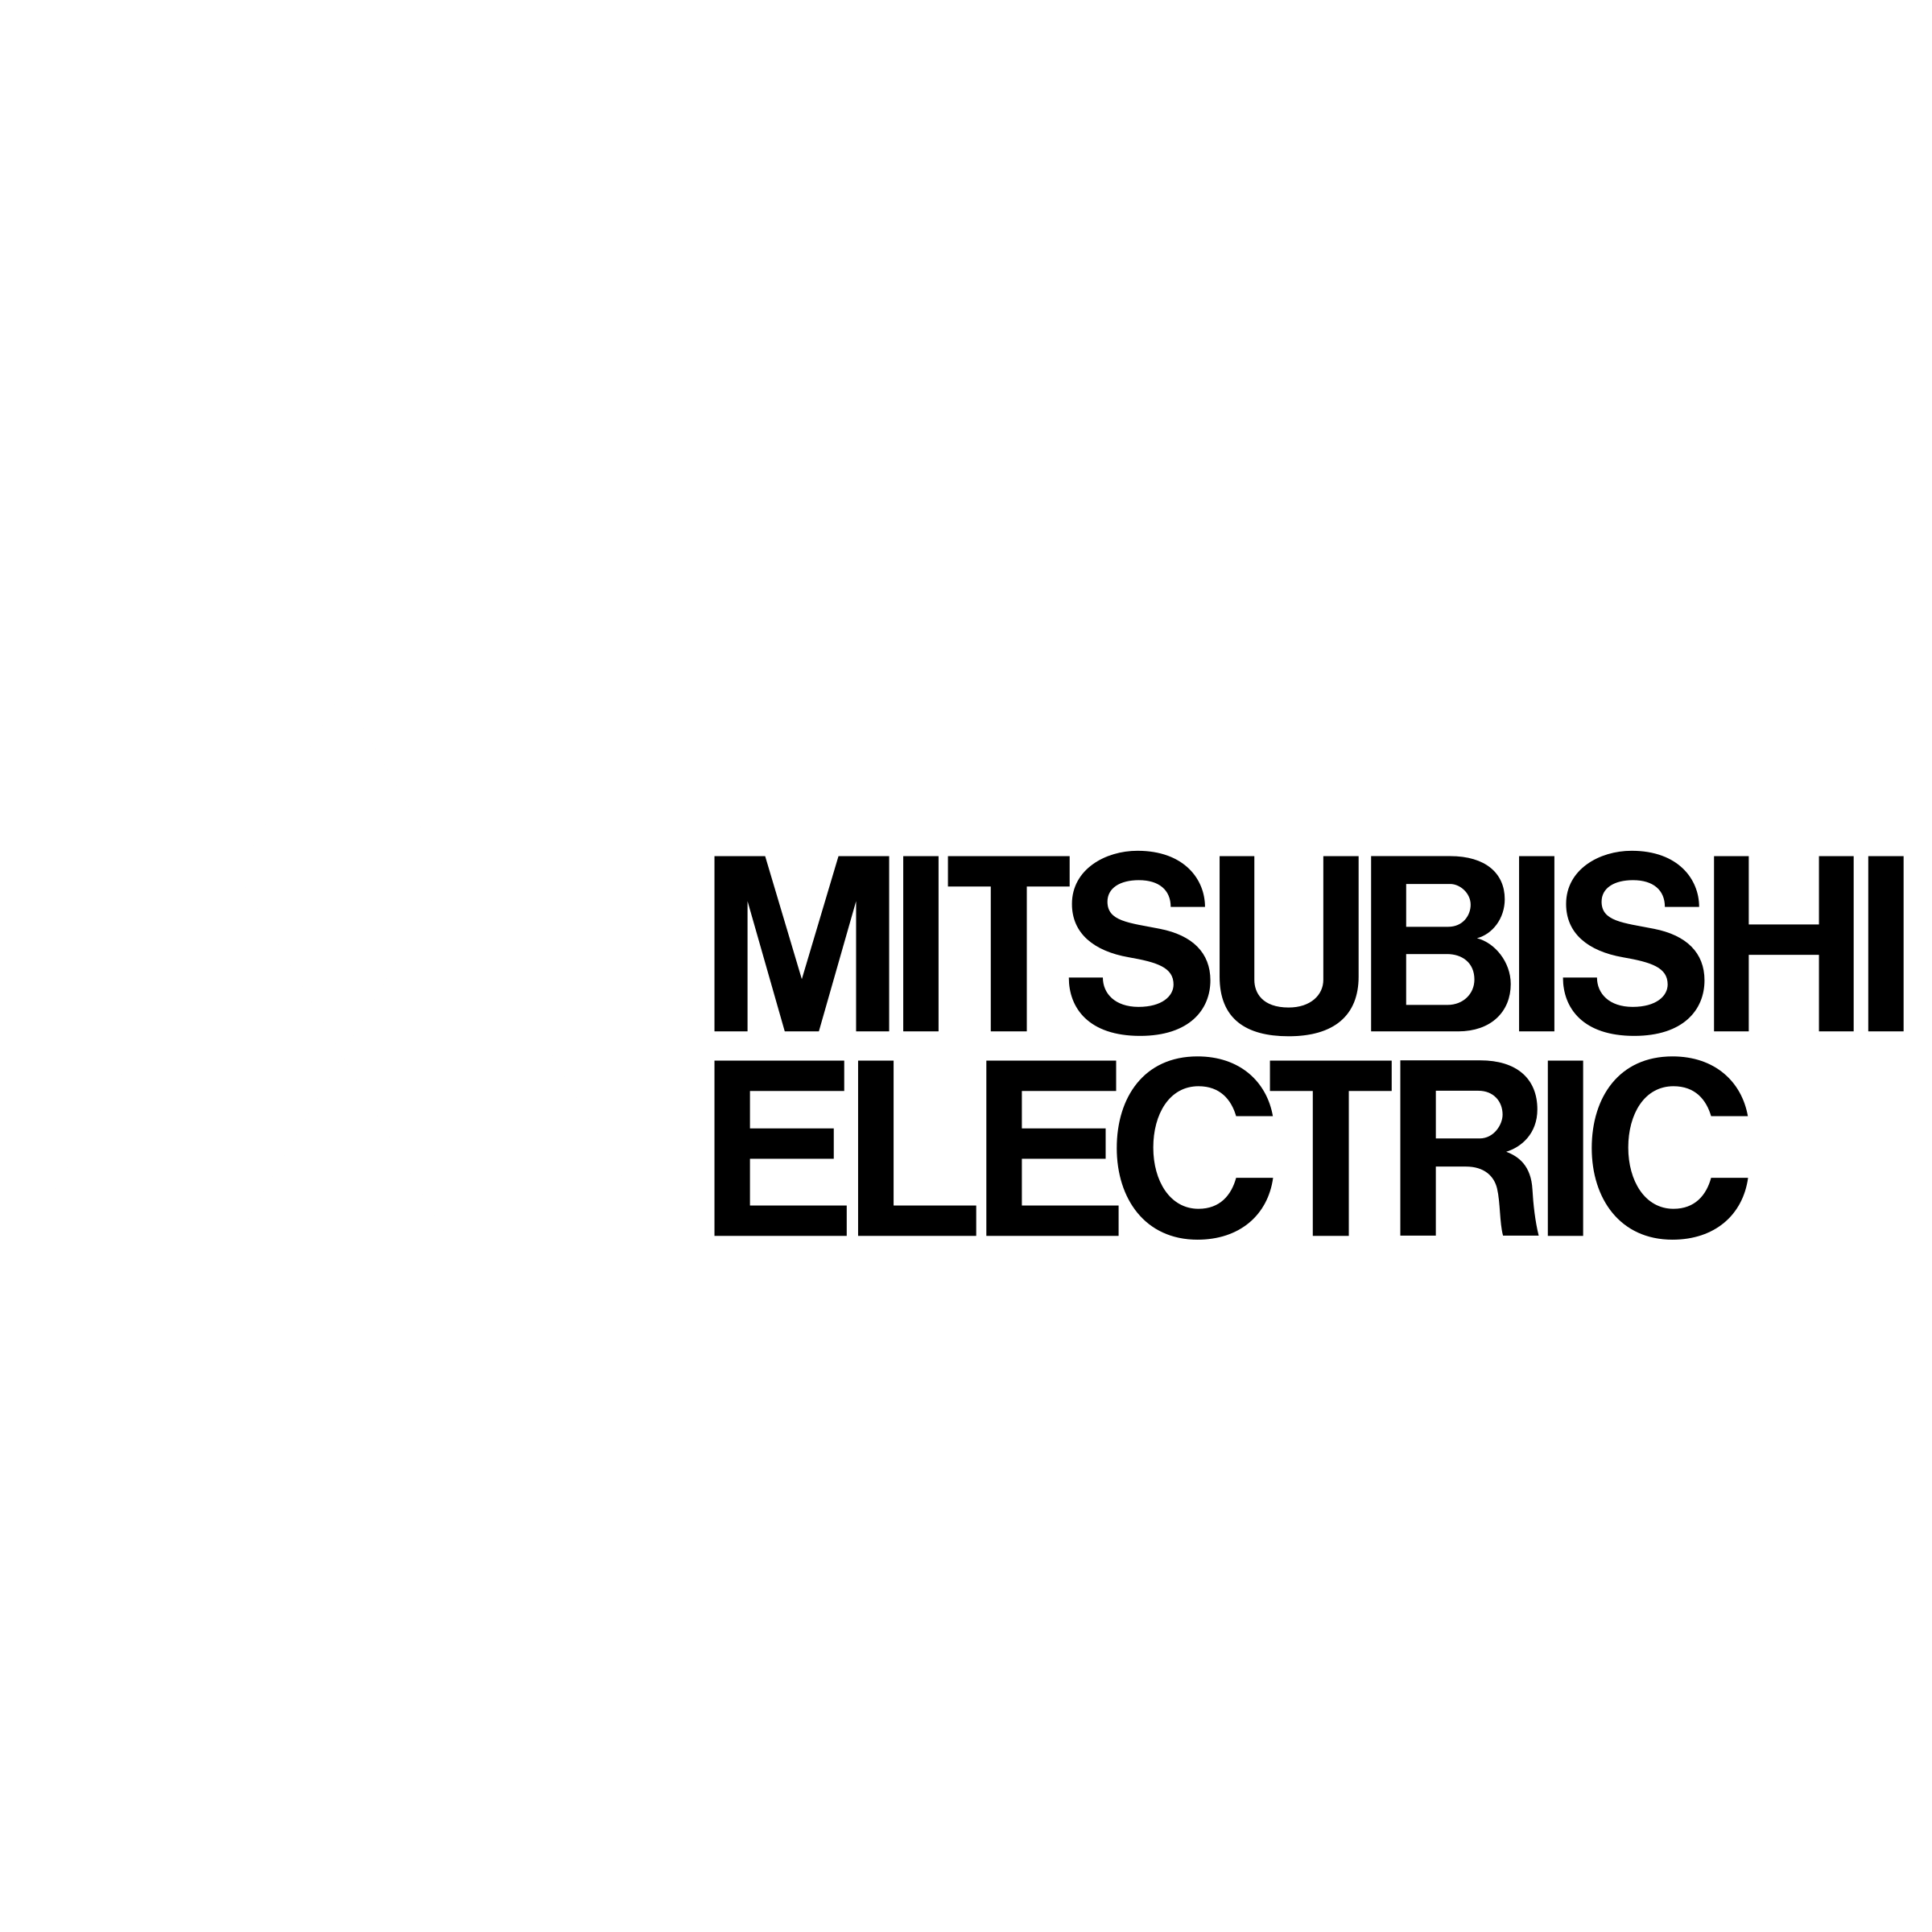 Mitsubishi Electric launches new brand campaign - The Economic Times